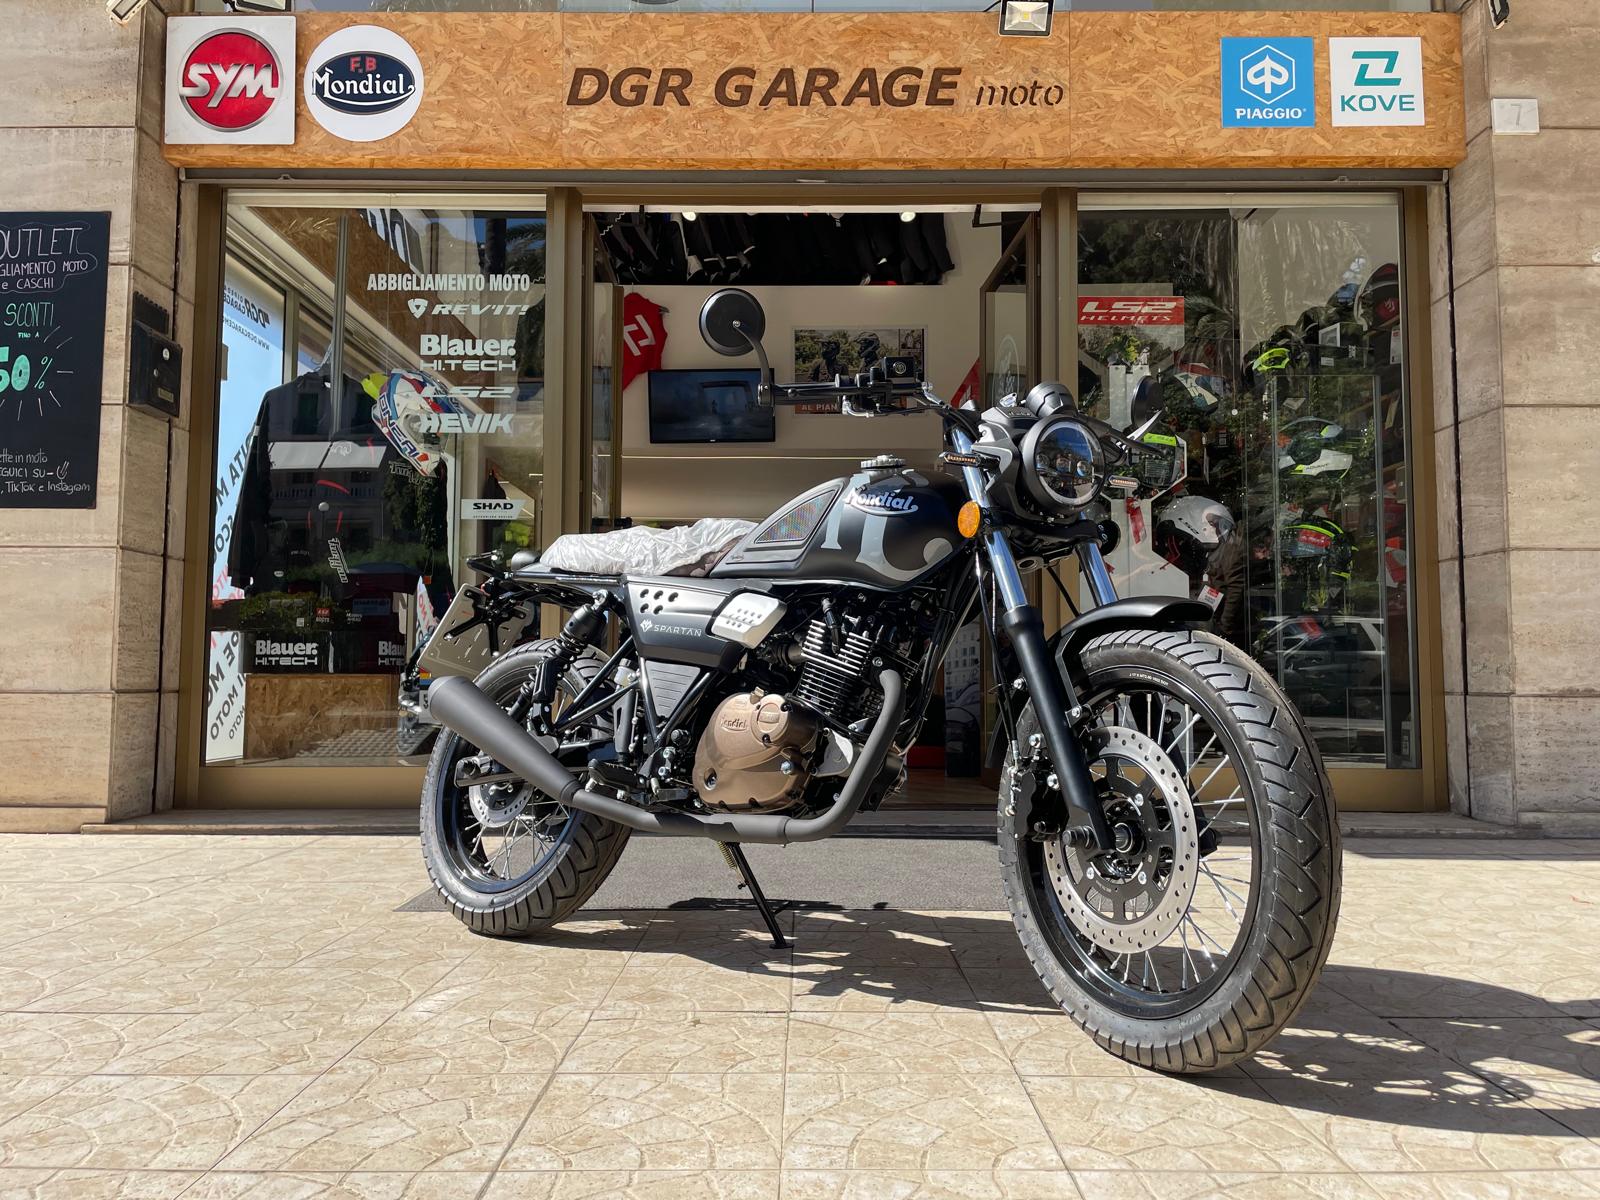 FB Mondial Spartan Dgr Garage moto